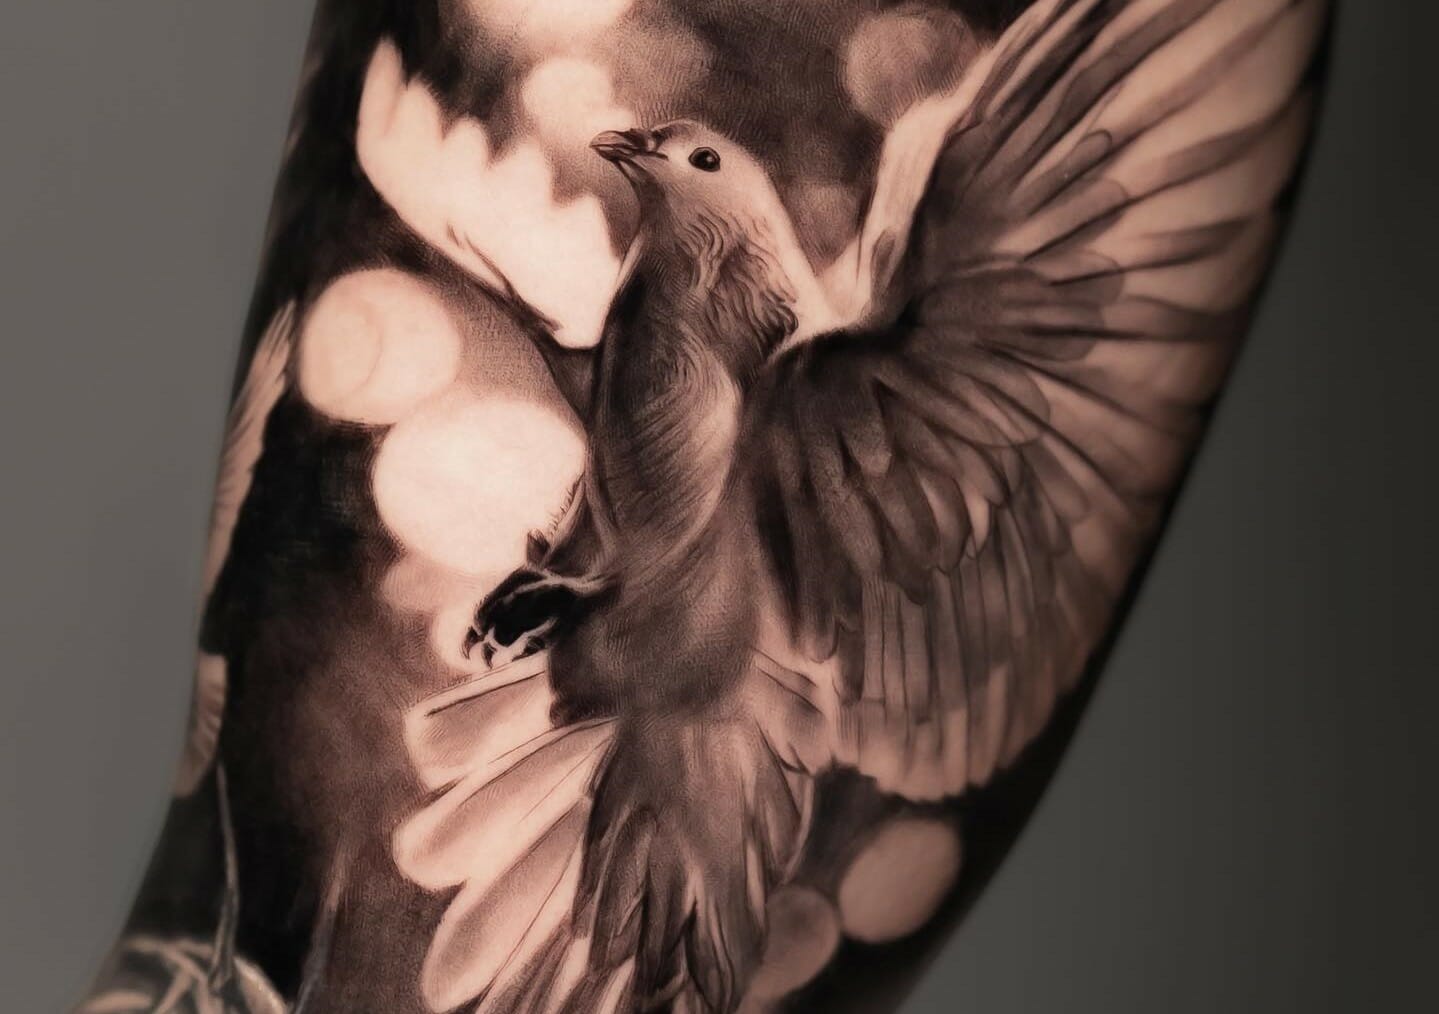 flying dove tattoo